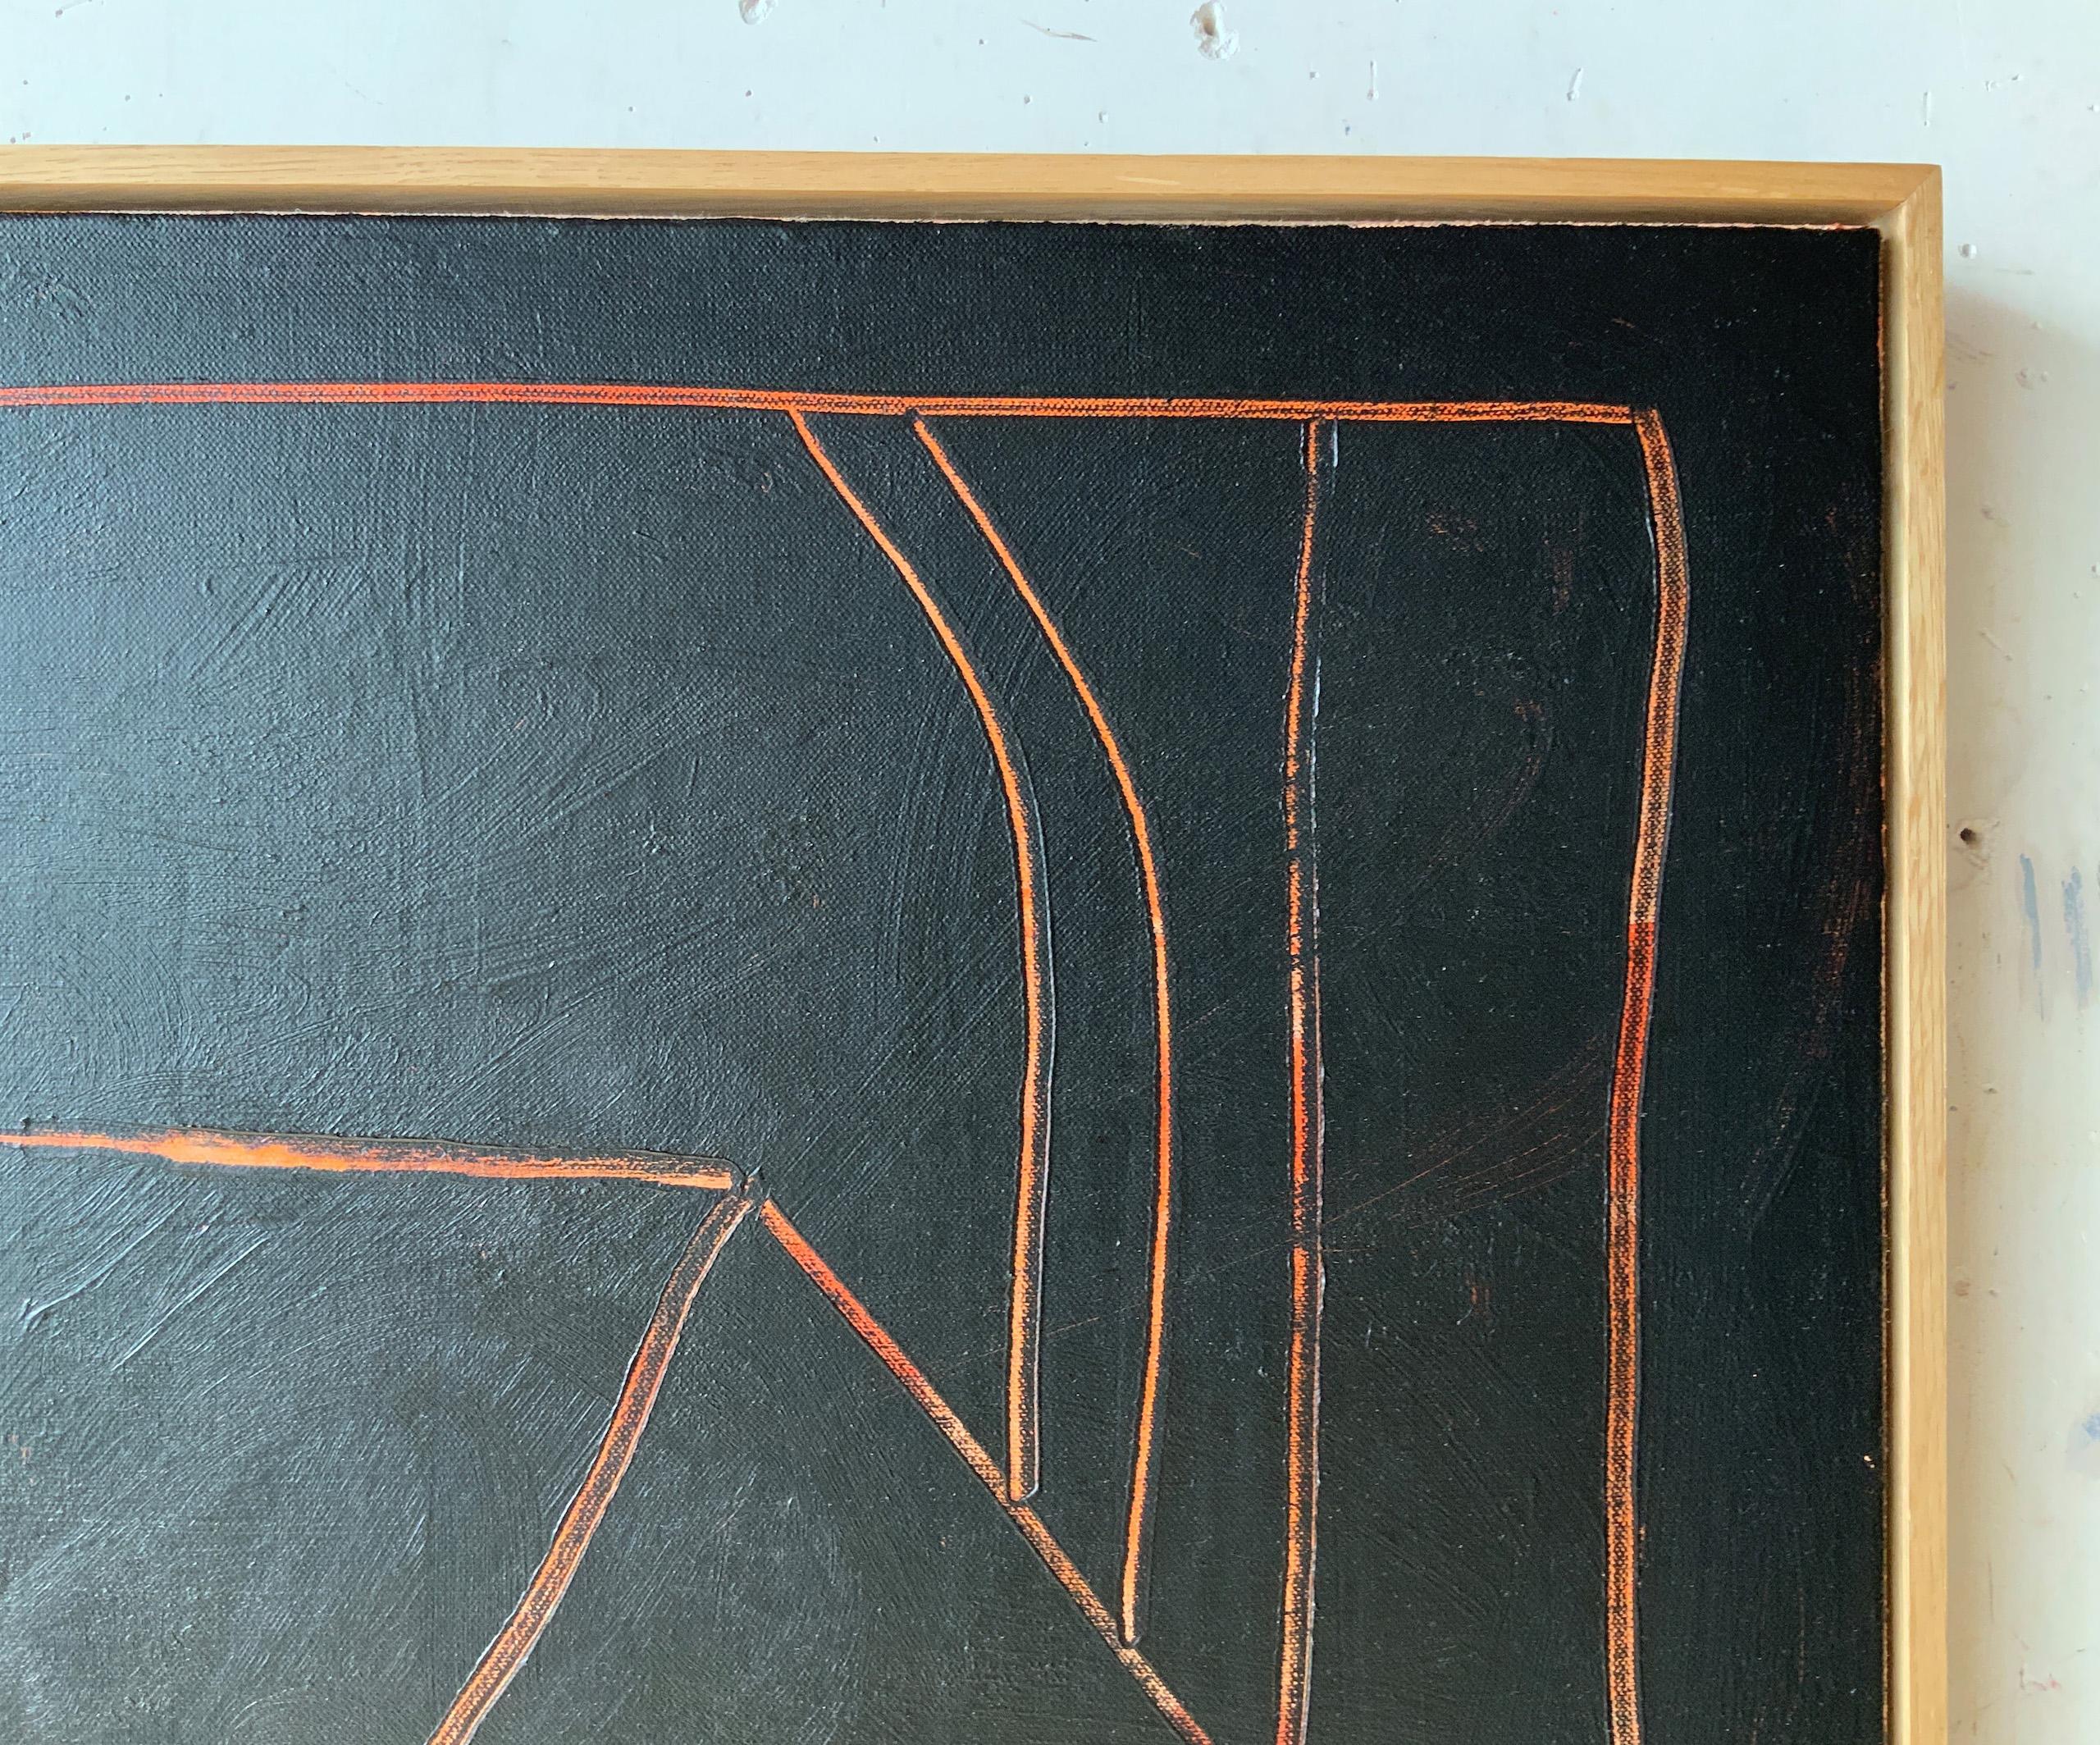 POMERIGGIO by Ramon Enrich - Geometric landscape painting, architecture, black For Sale 4